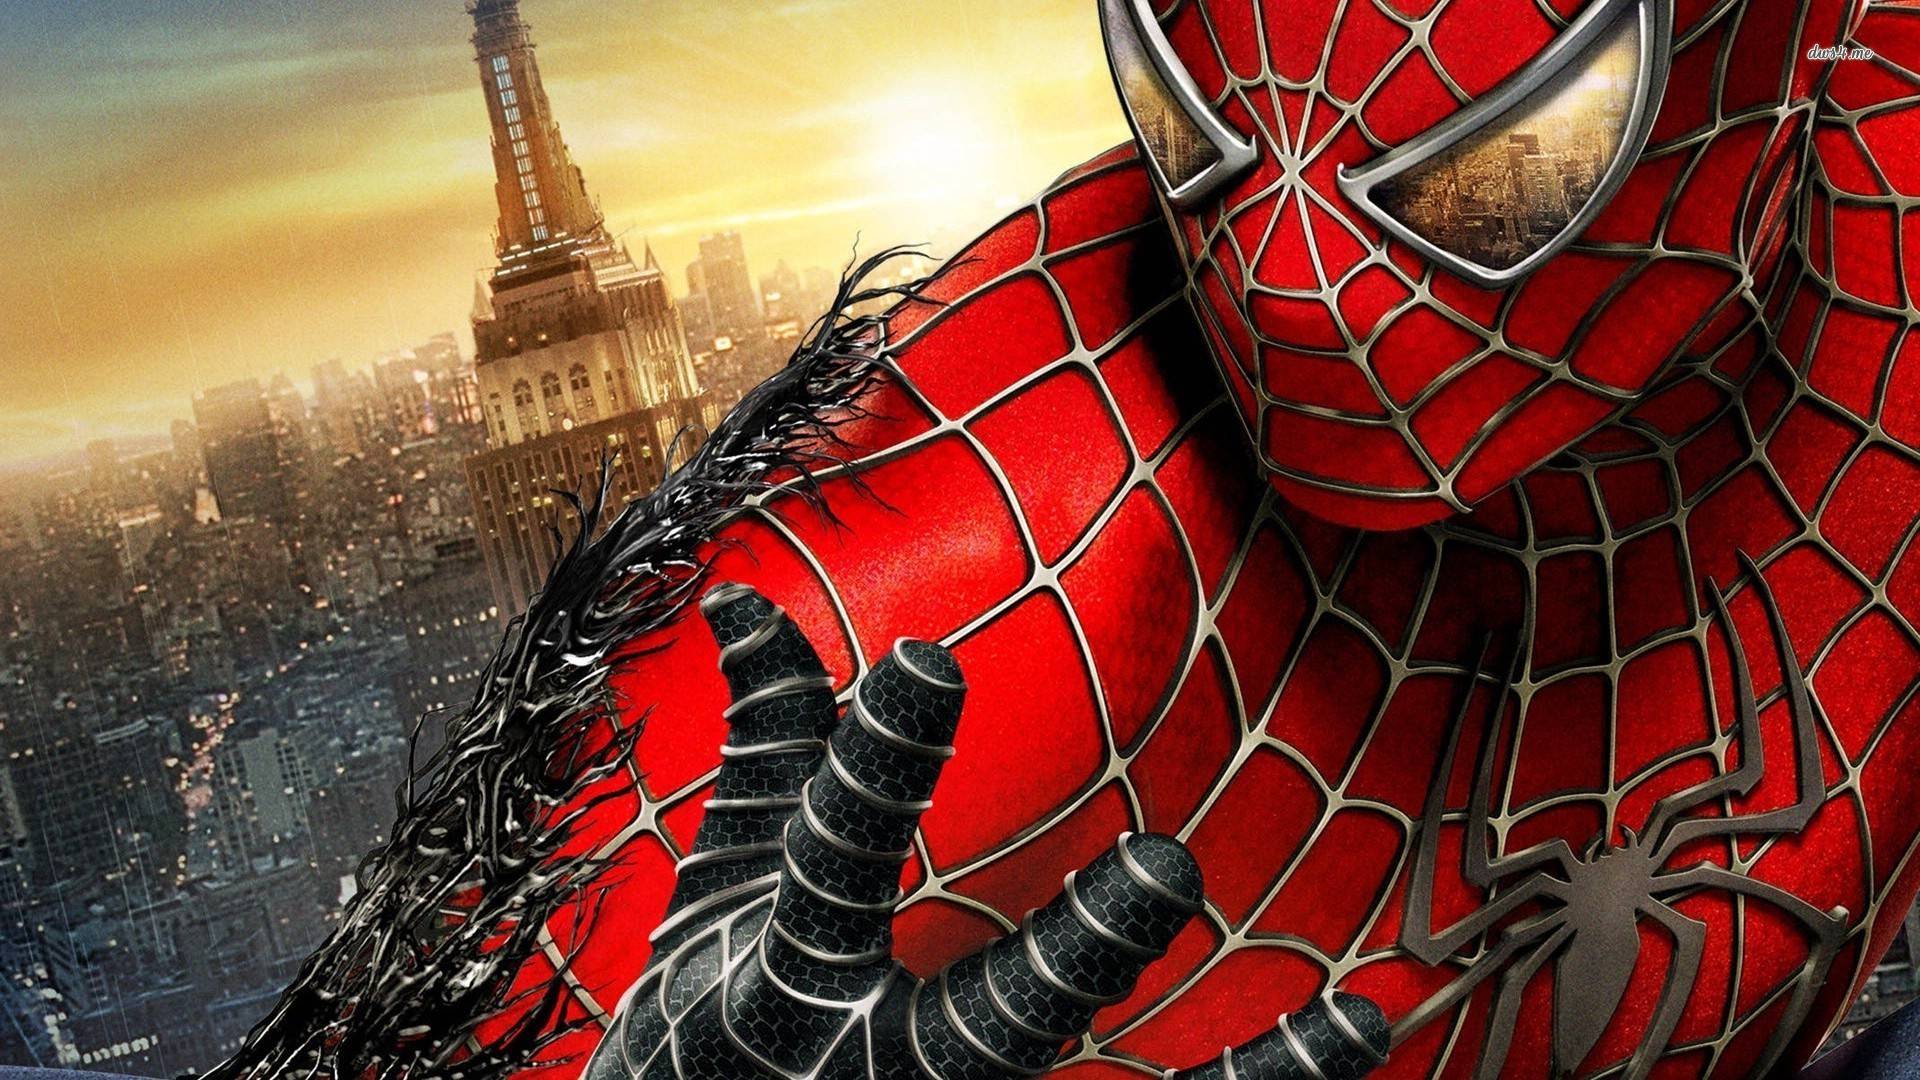 Spiderman Hd Image – download HD image